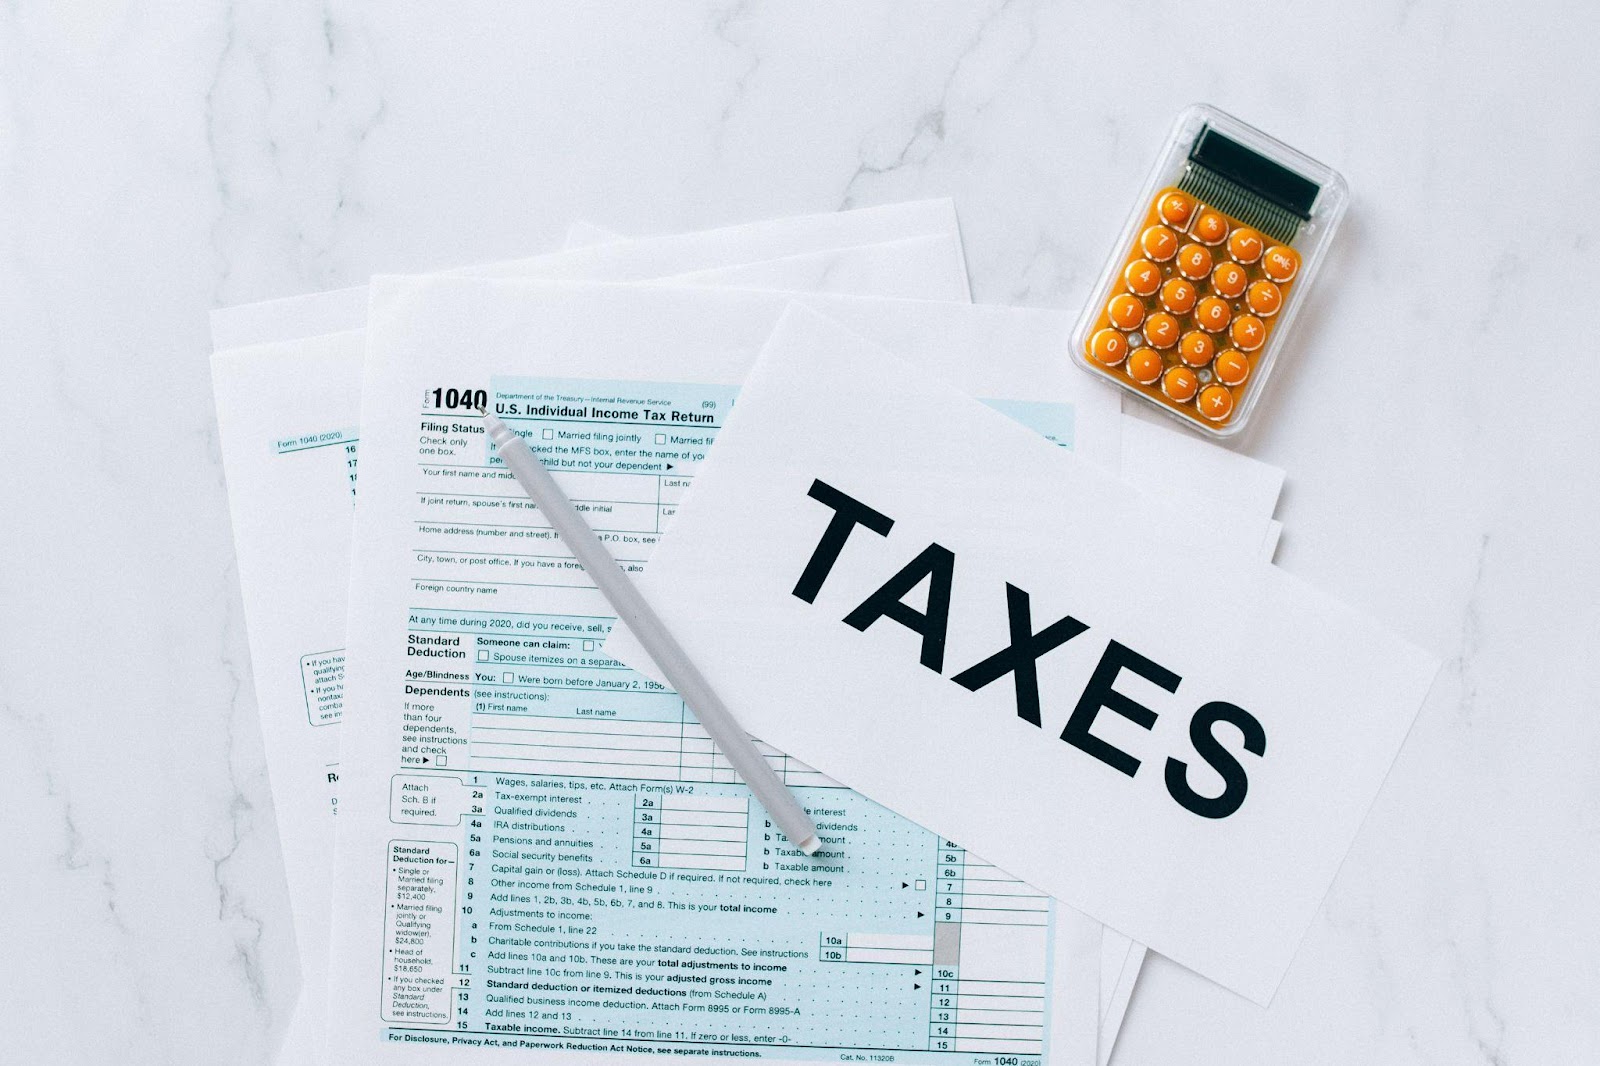 a tax return paperwork with calculator